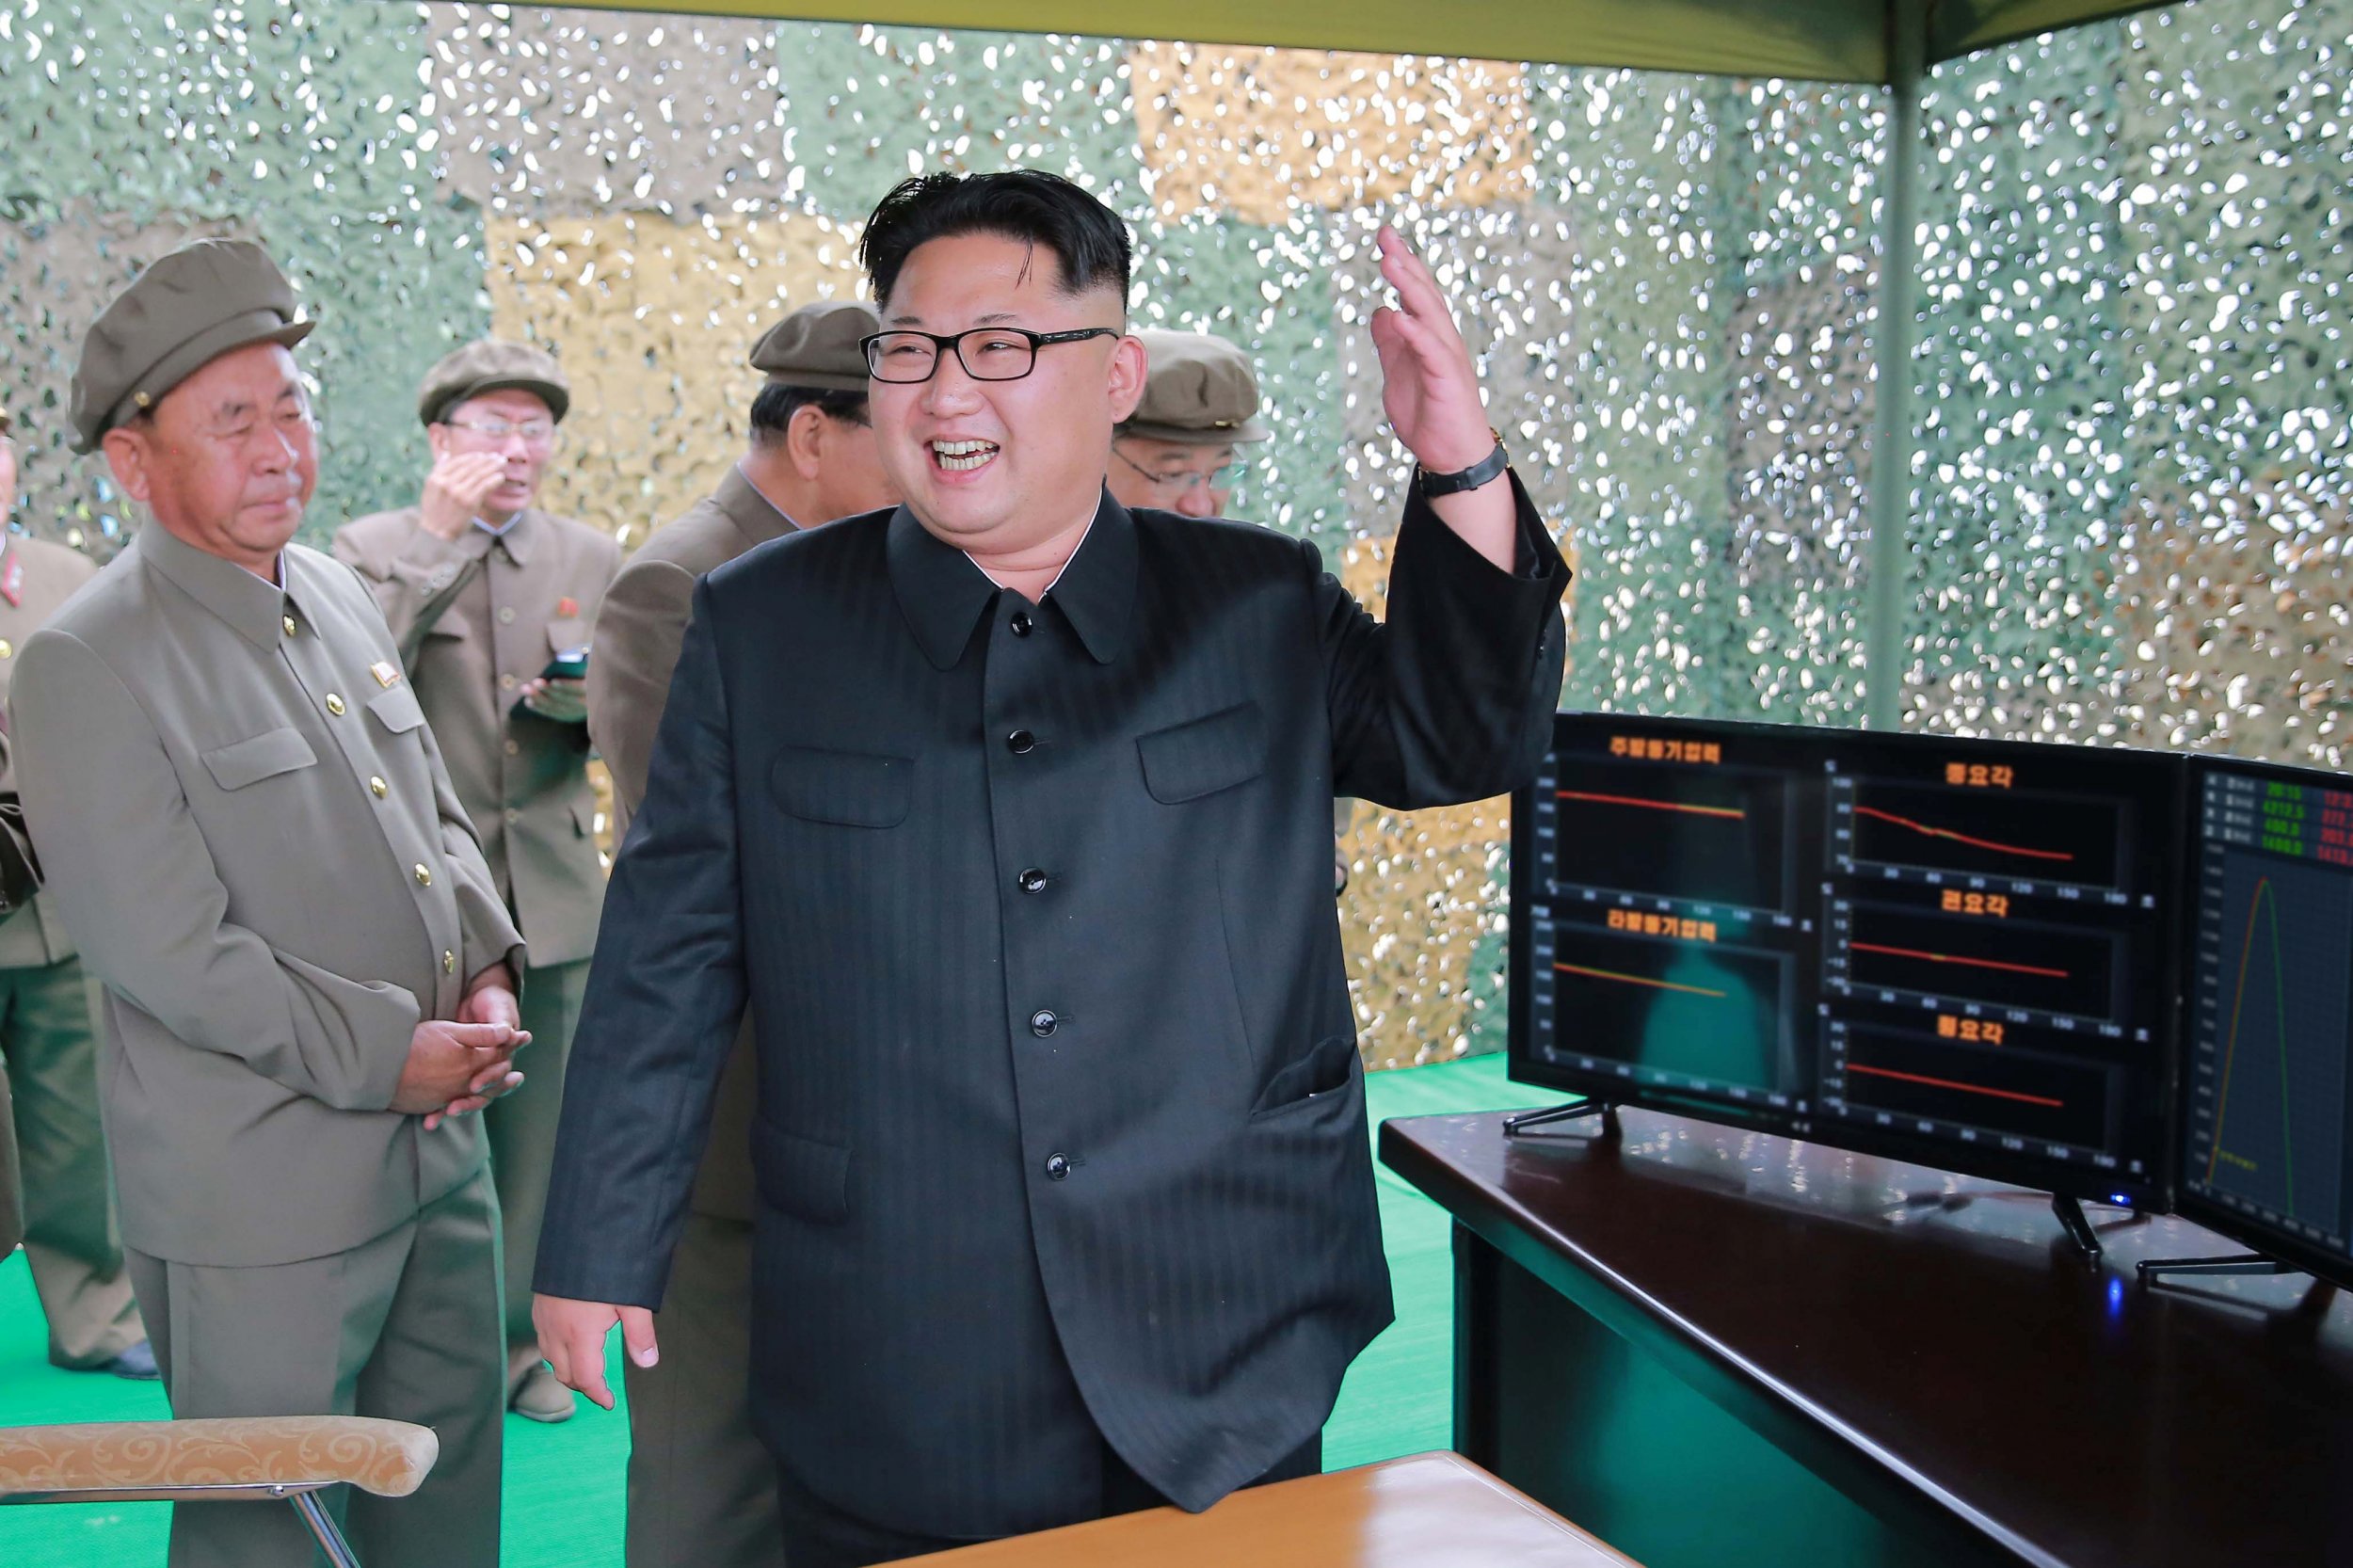 Kim Jong Un Is Now Officially Head of North Korea